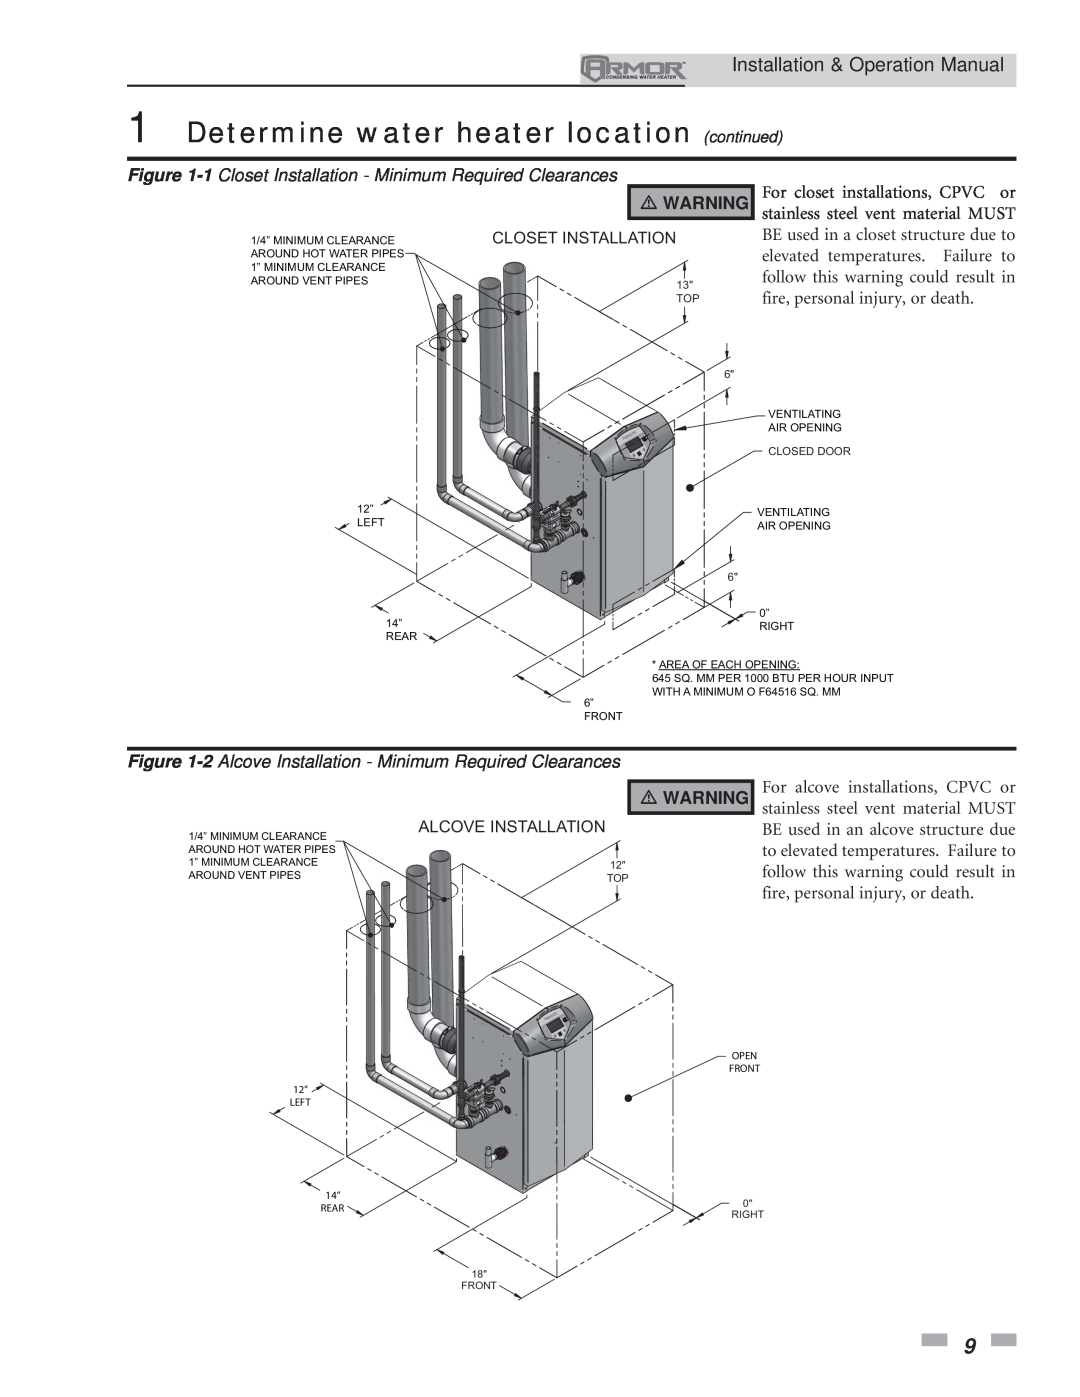 Lochinvar 151 operation manual Determine water heater location continued, Installation & Operation Manual 